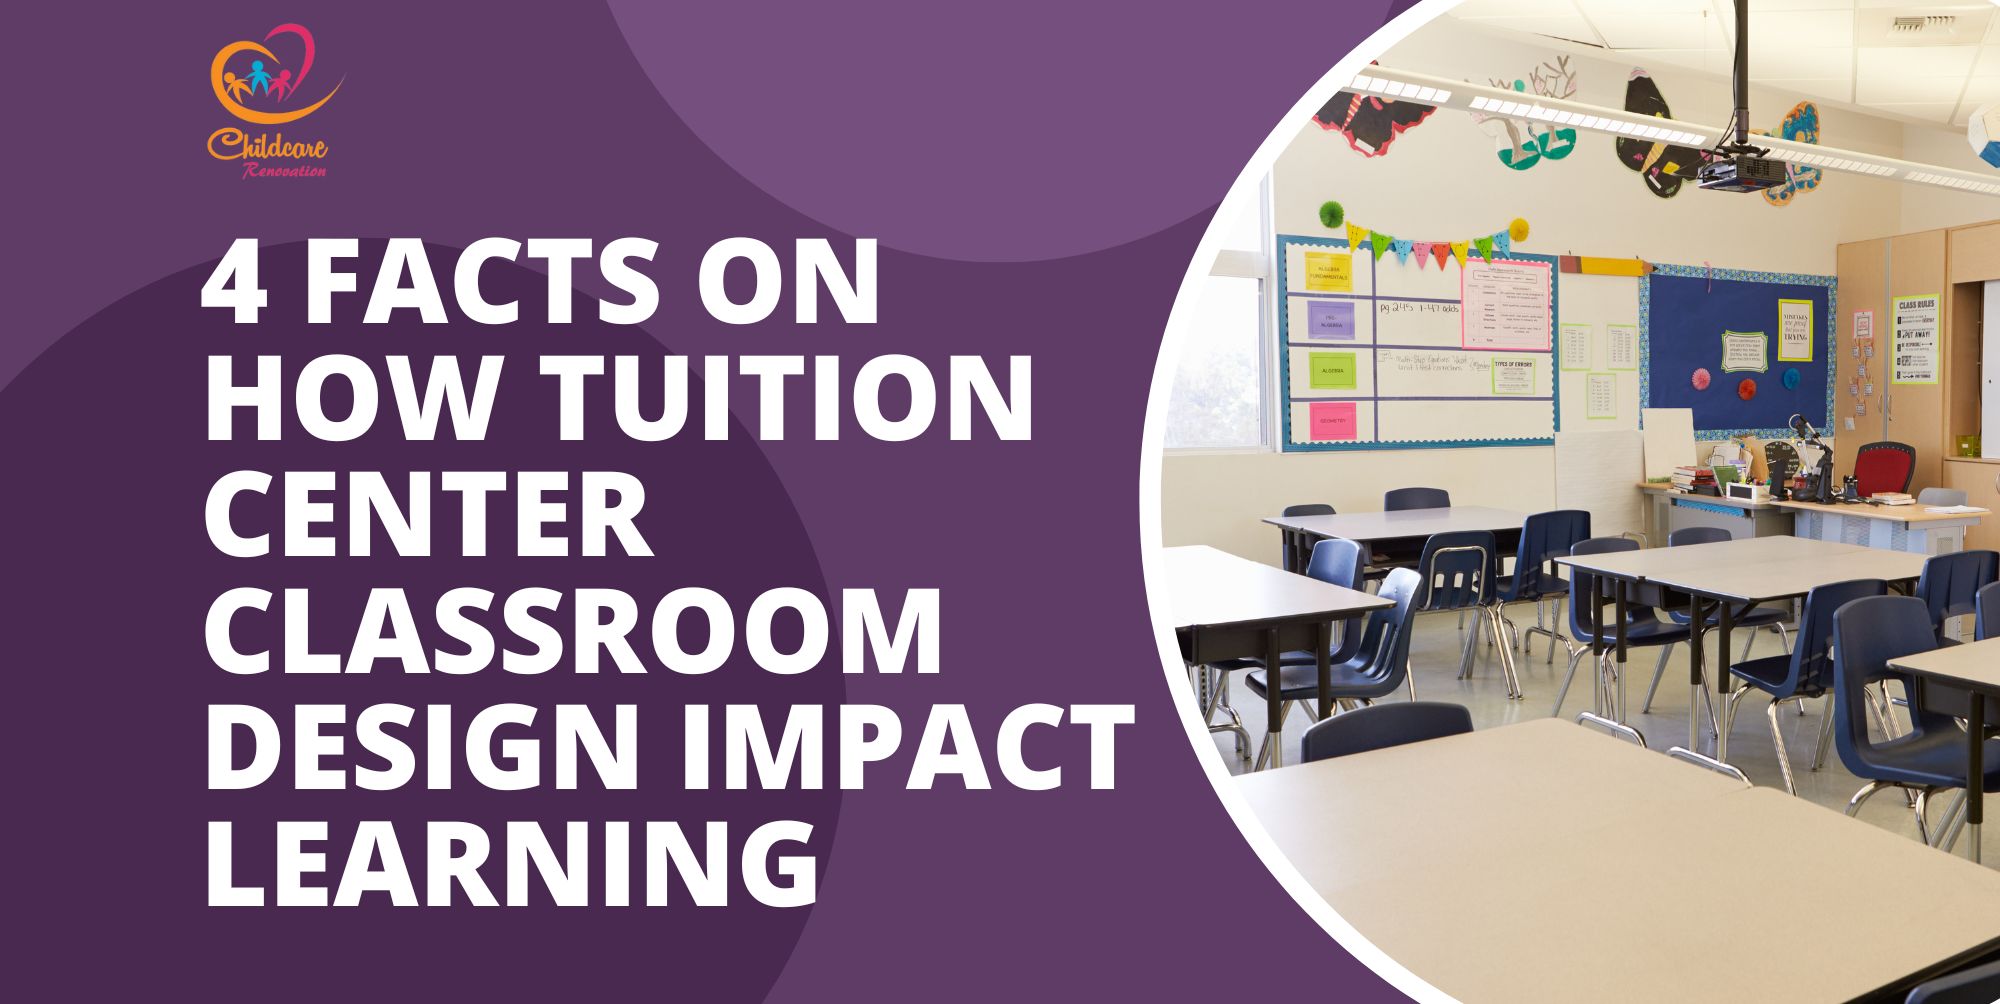 tuition center classroom design